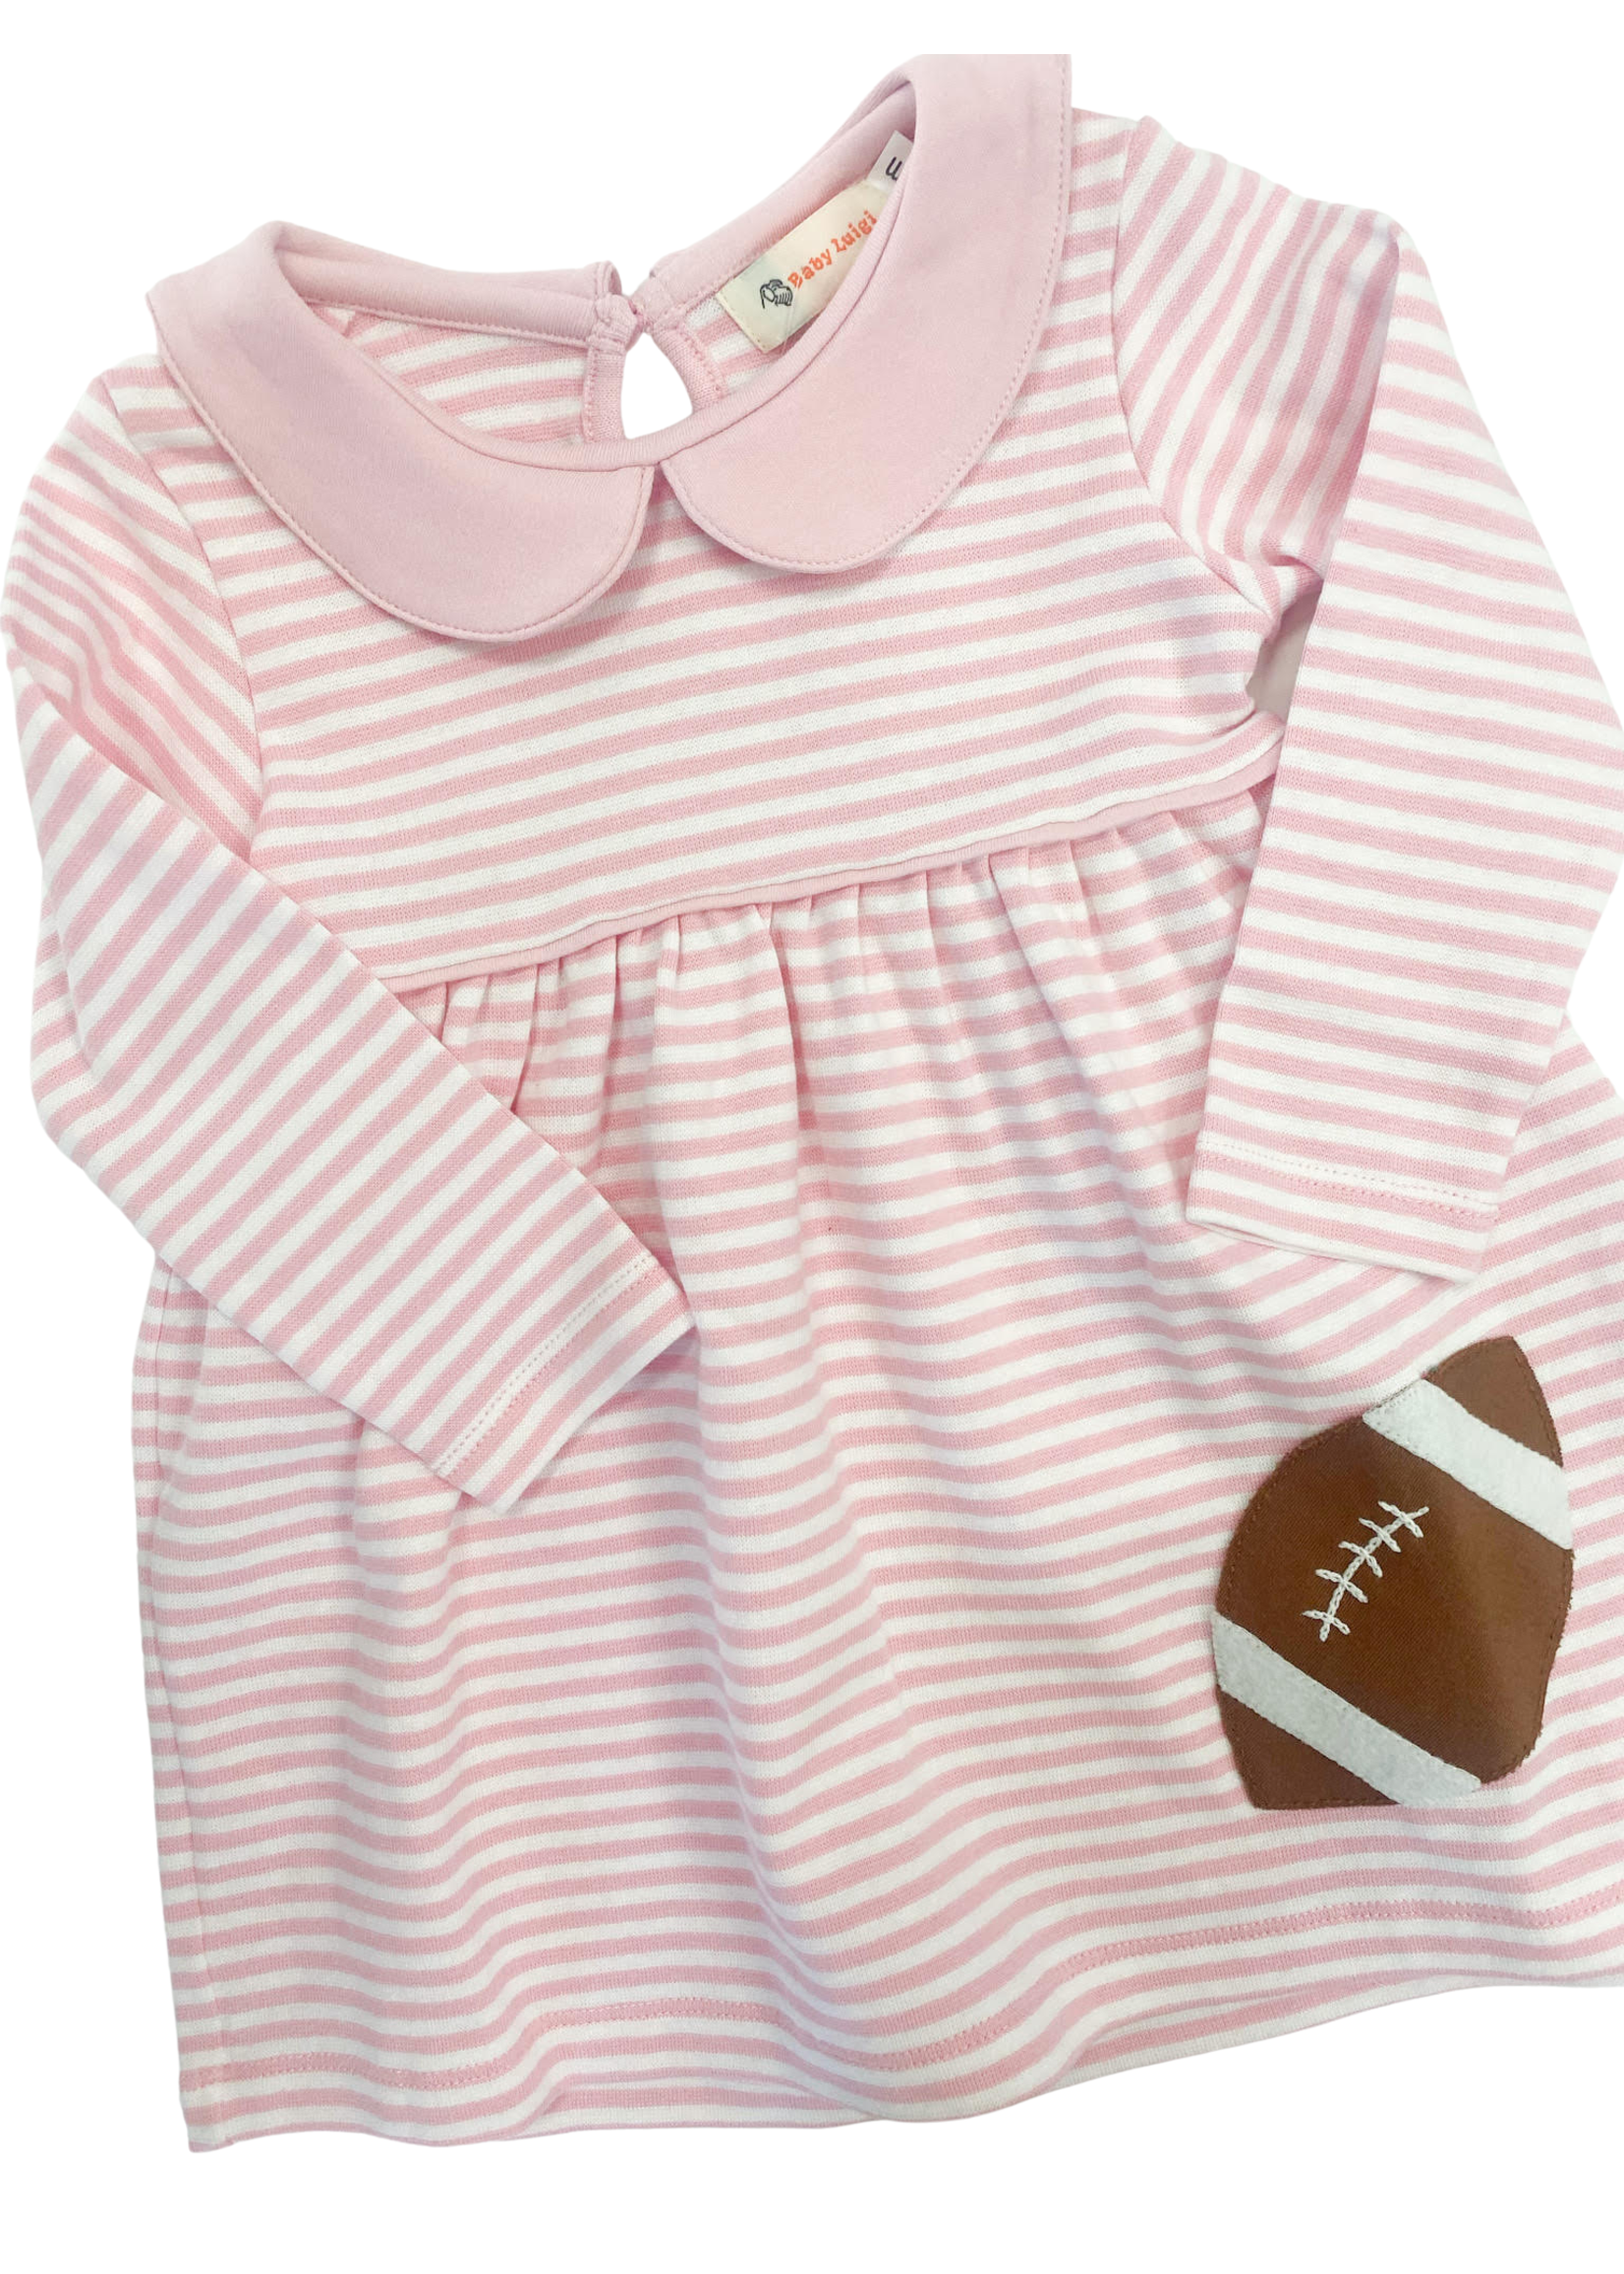 Luigi Luigi Pink Stripe Football Dress